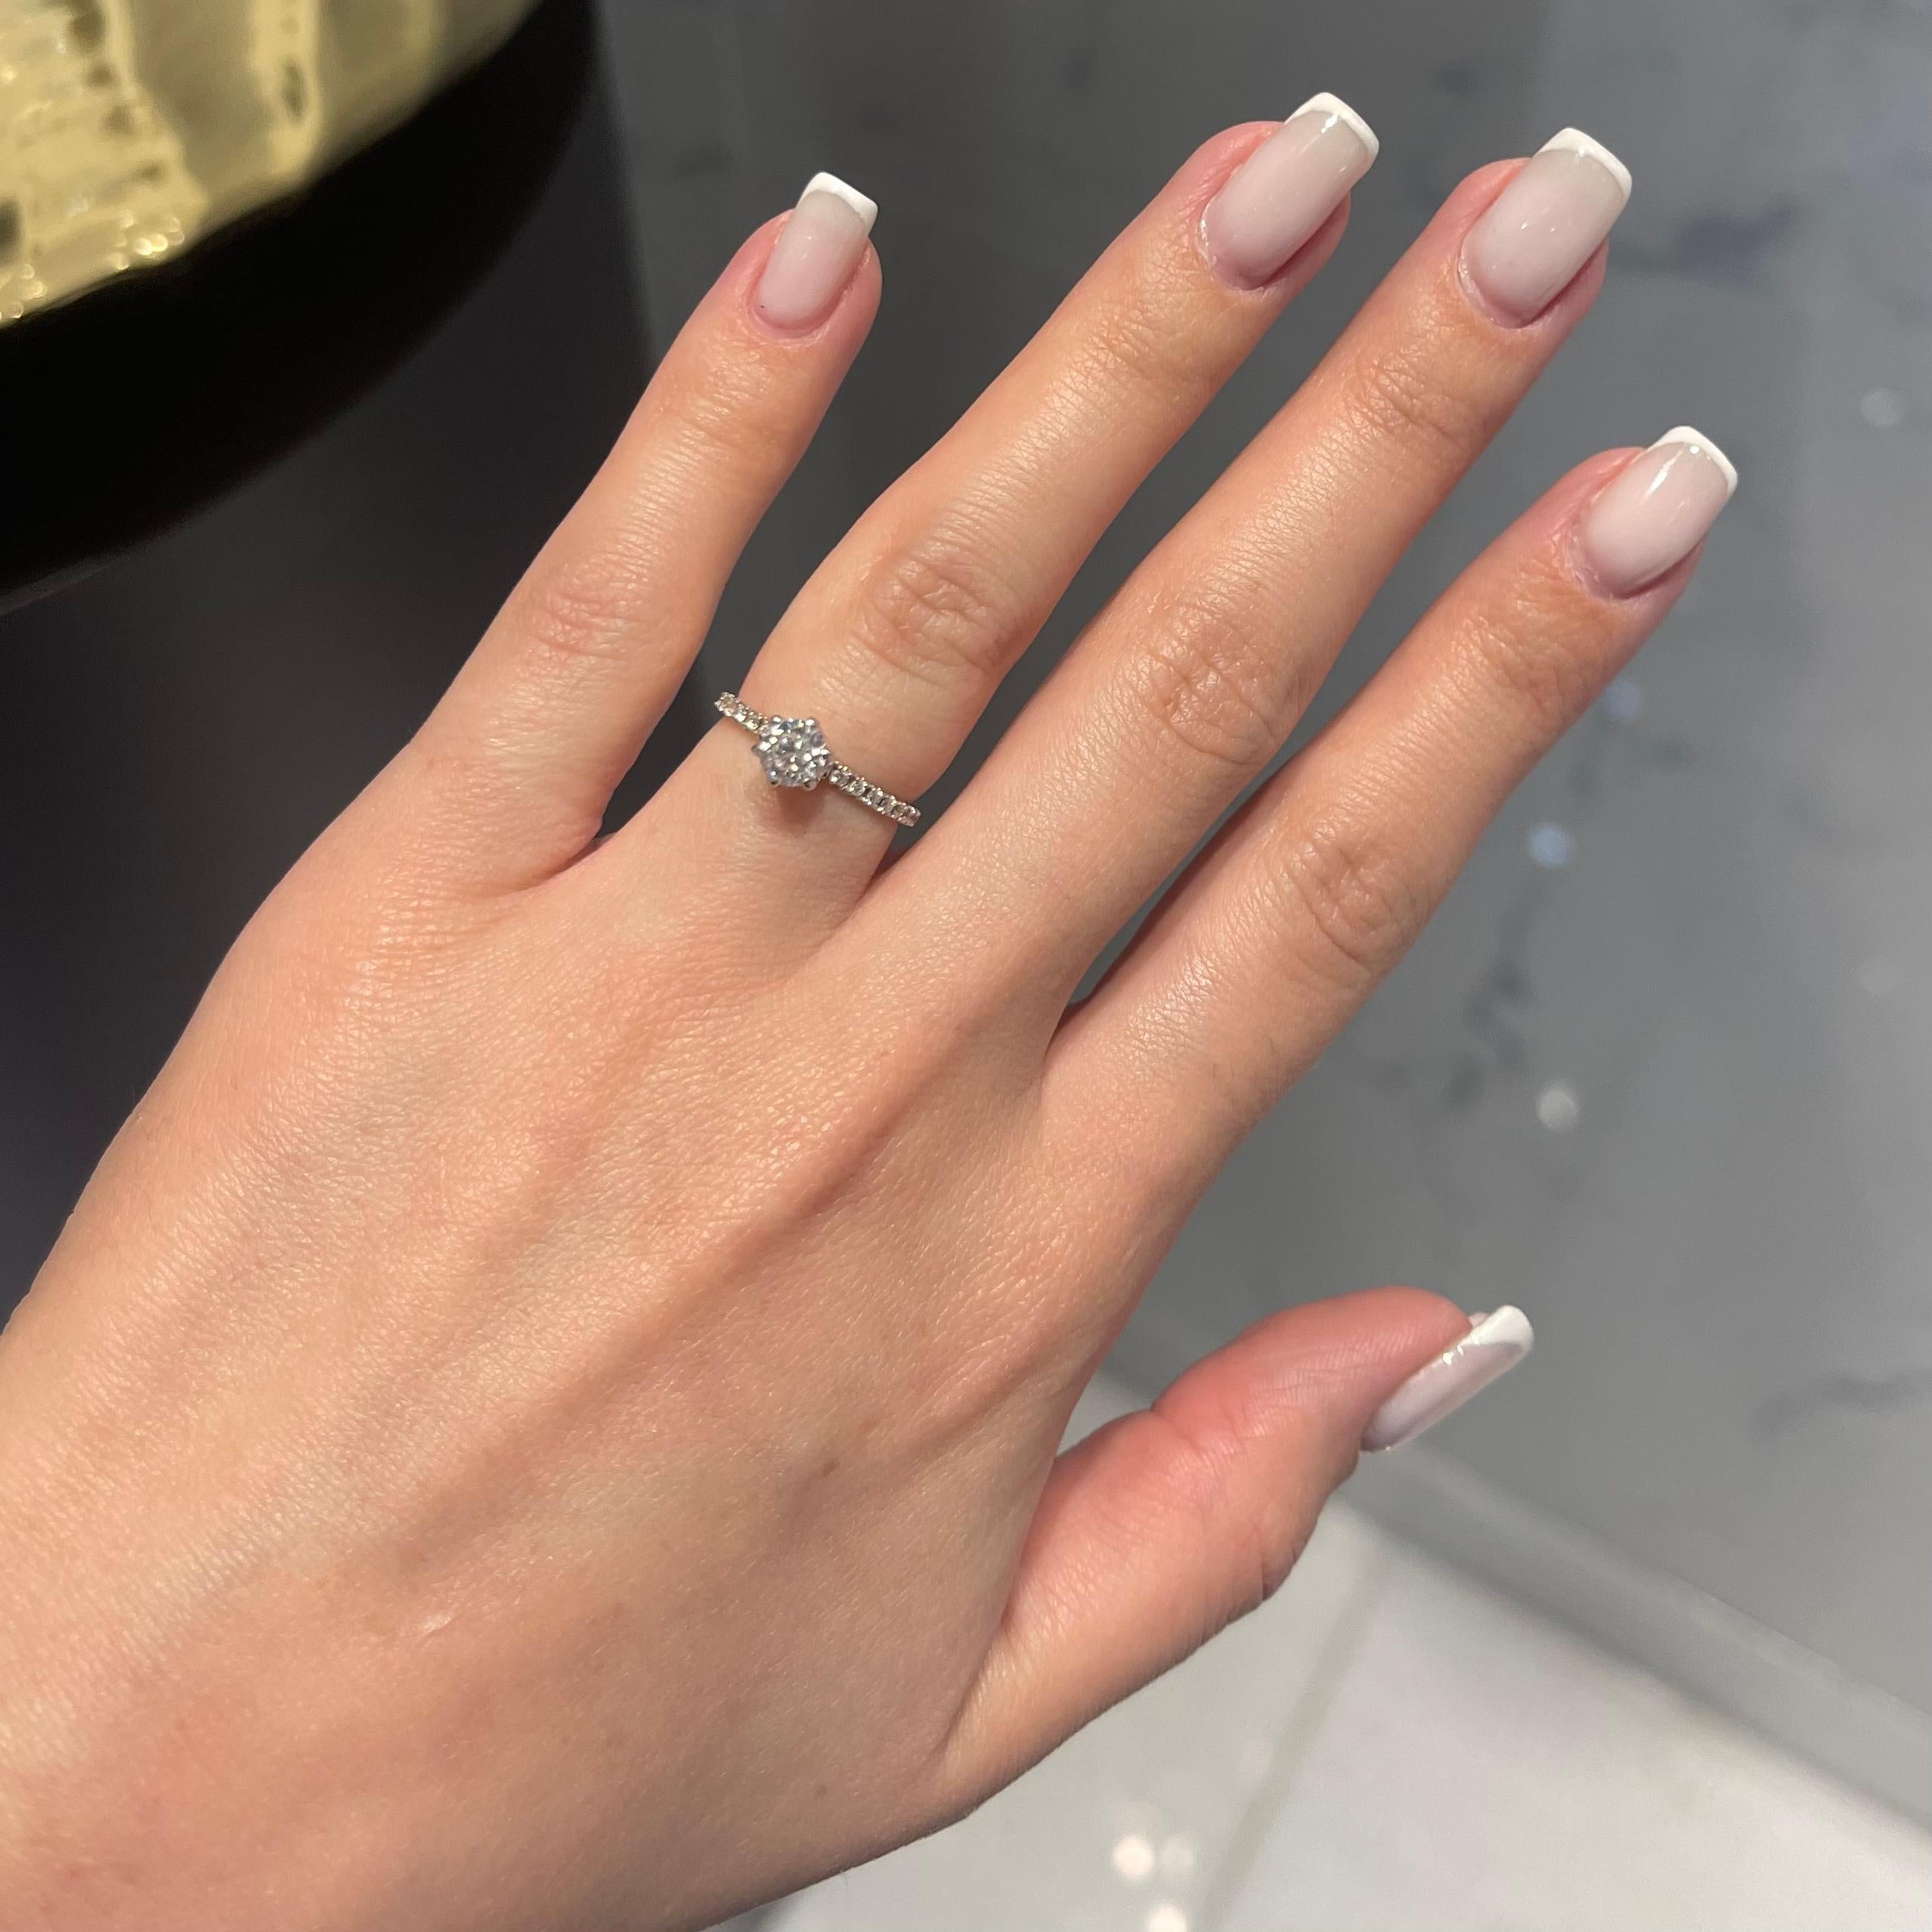 0.5 carat diamond engagement ring